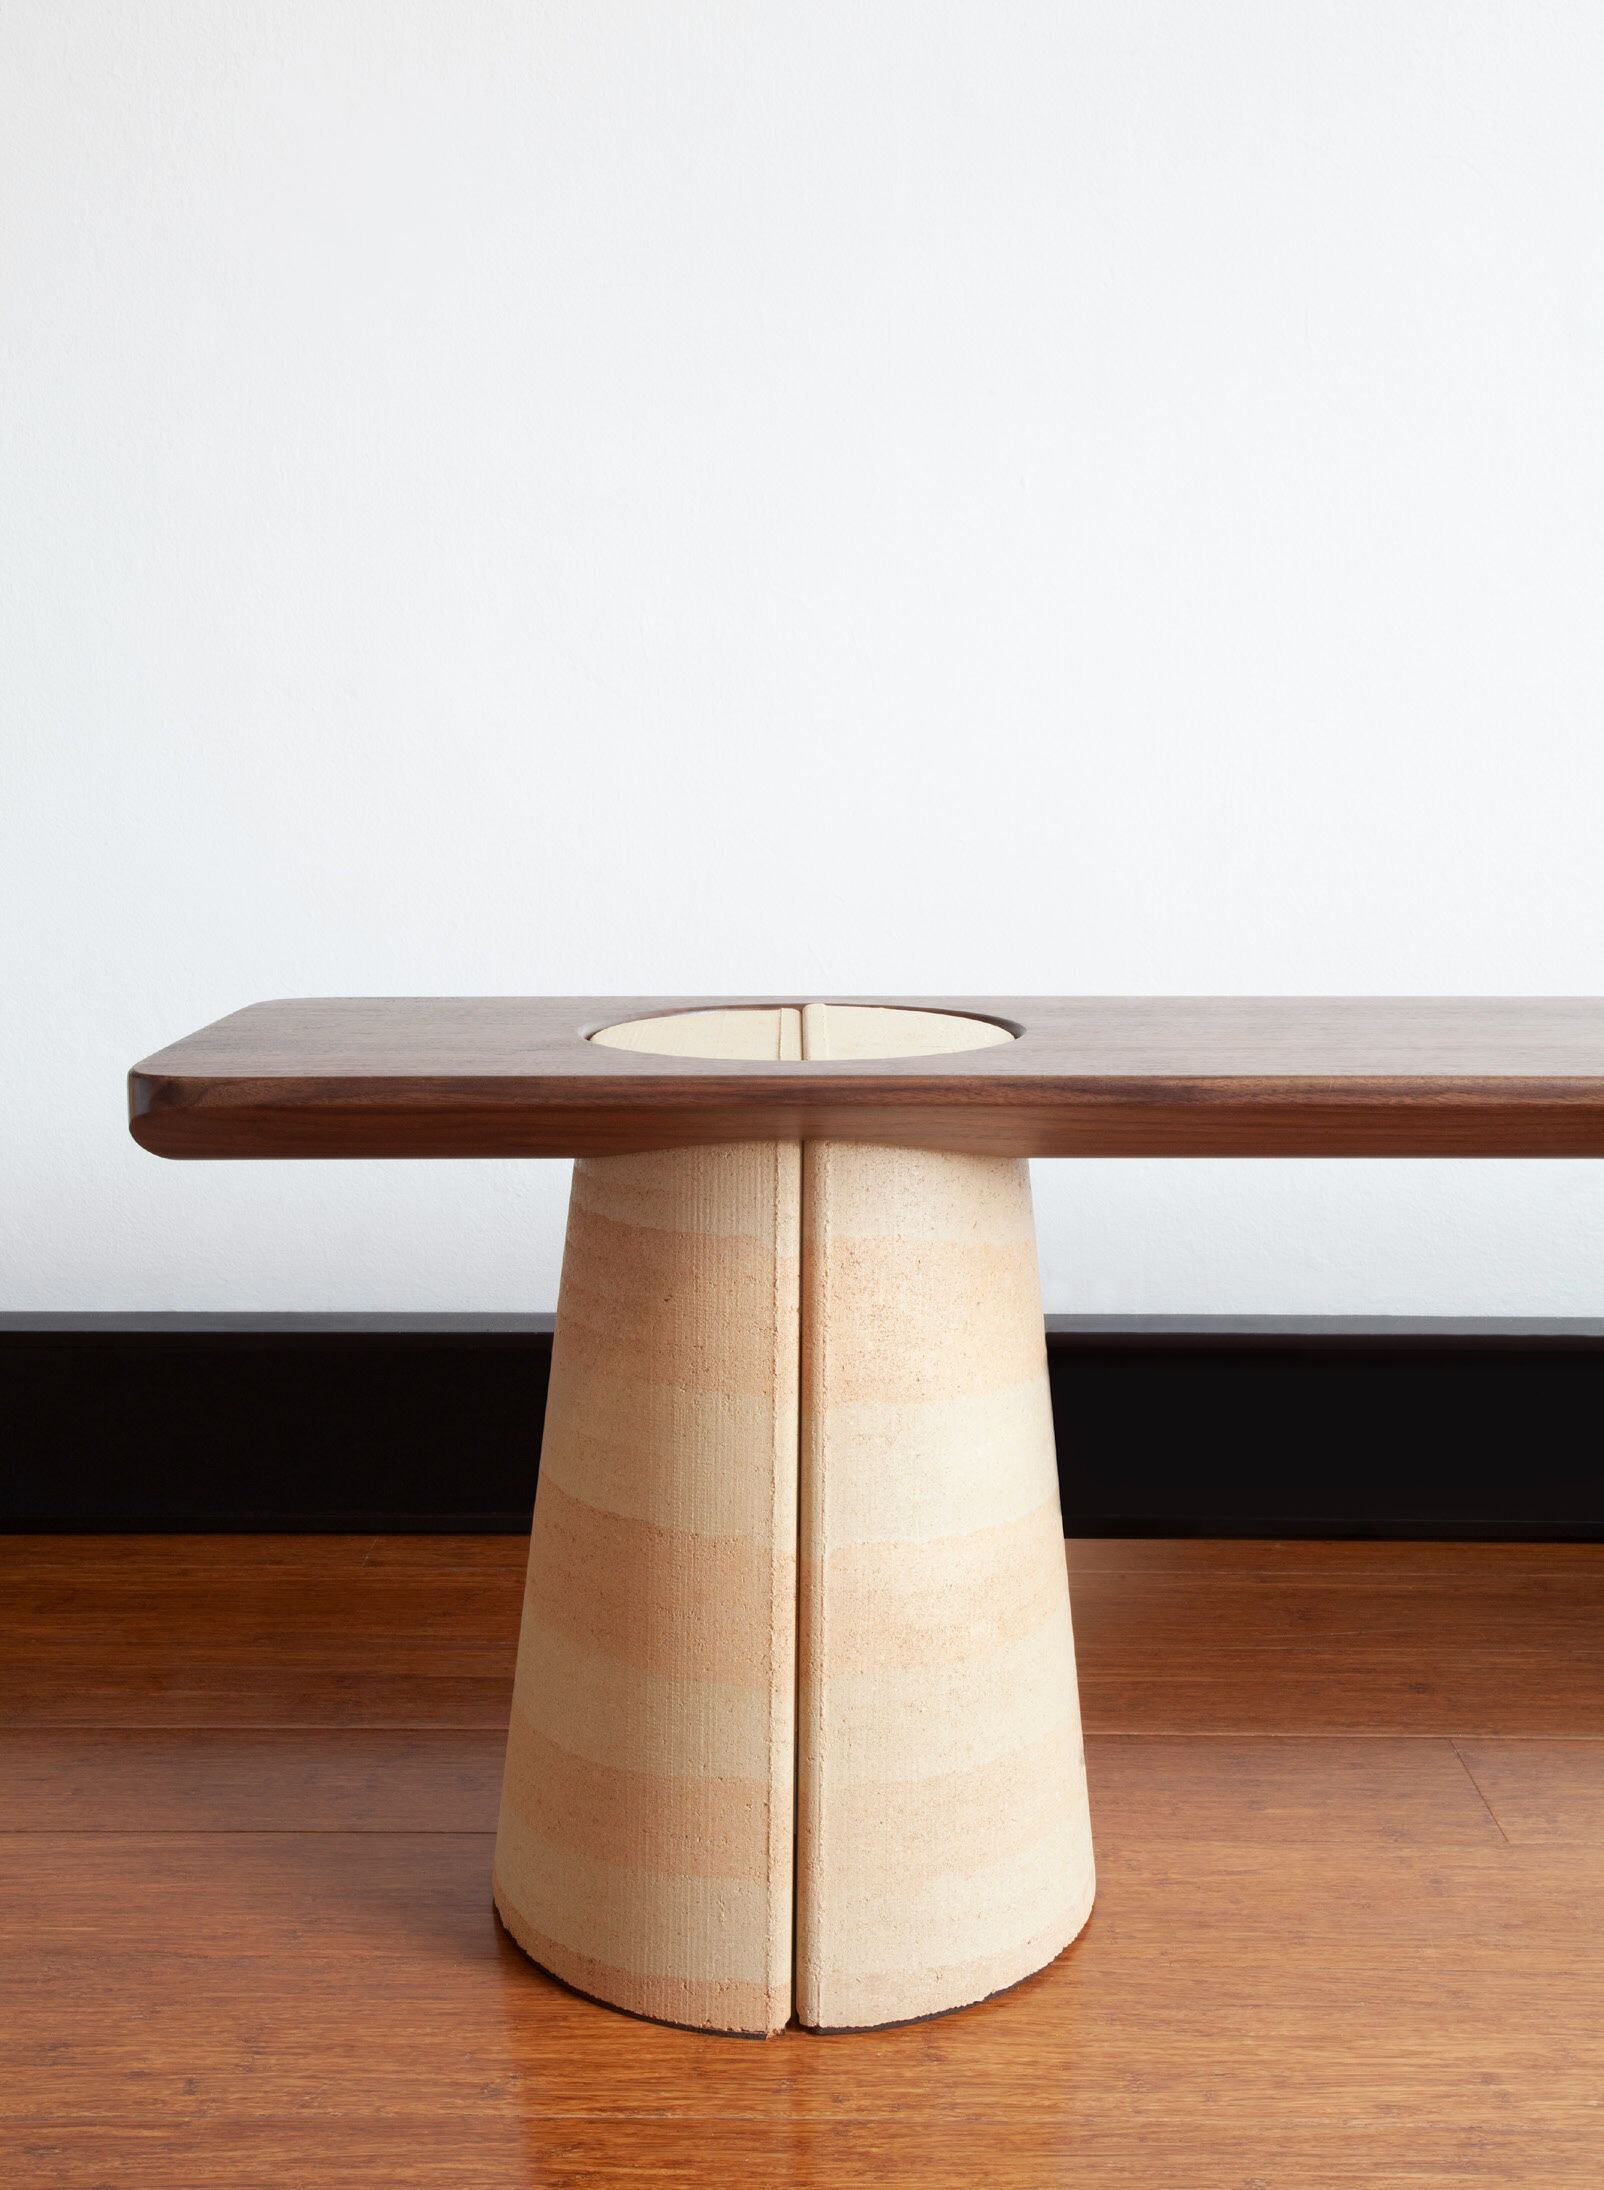 Australian Furniture Design Awards 2020 Winning Design